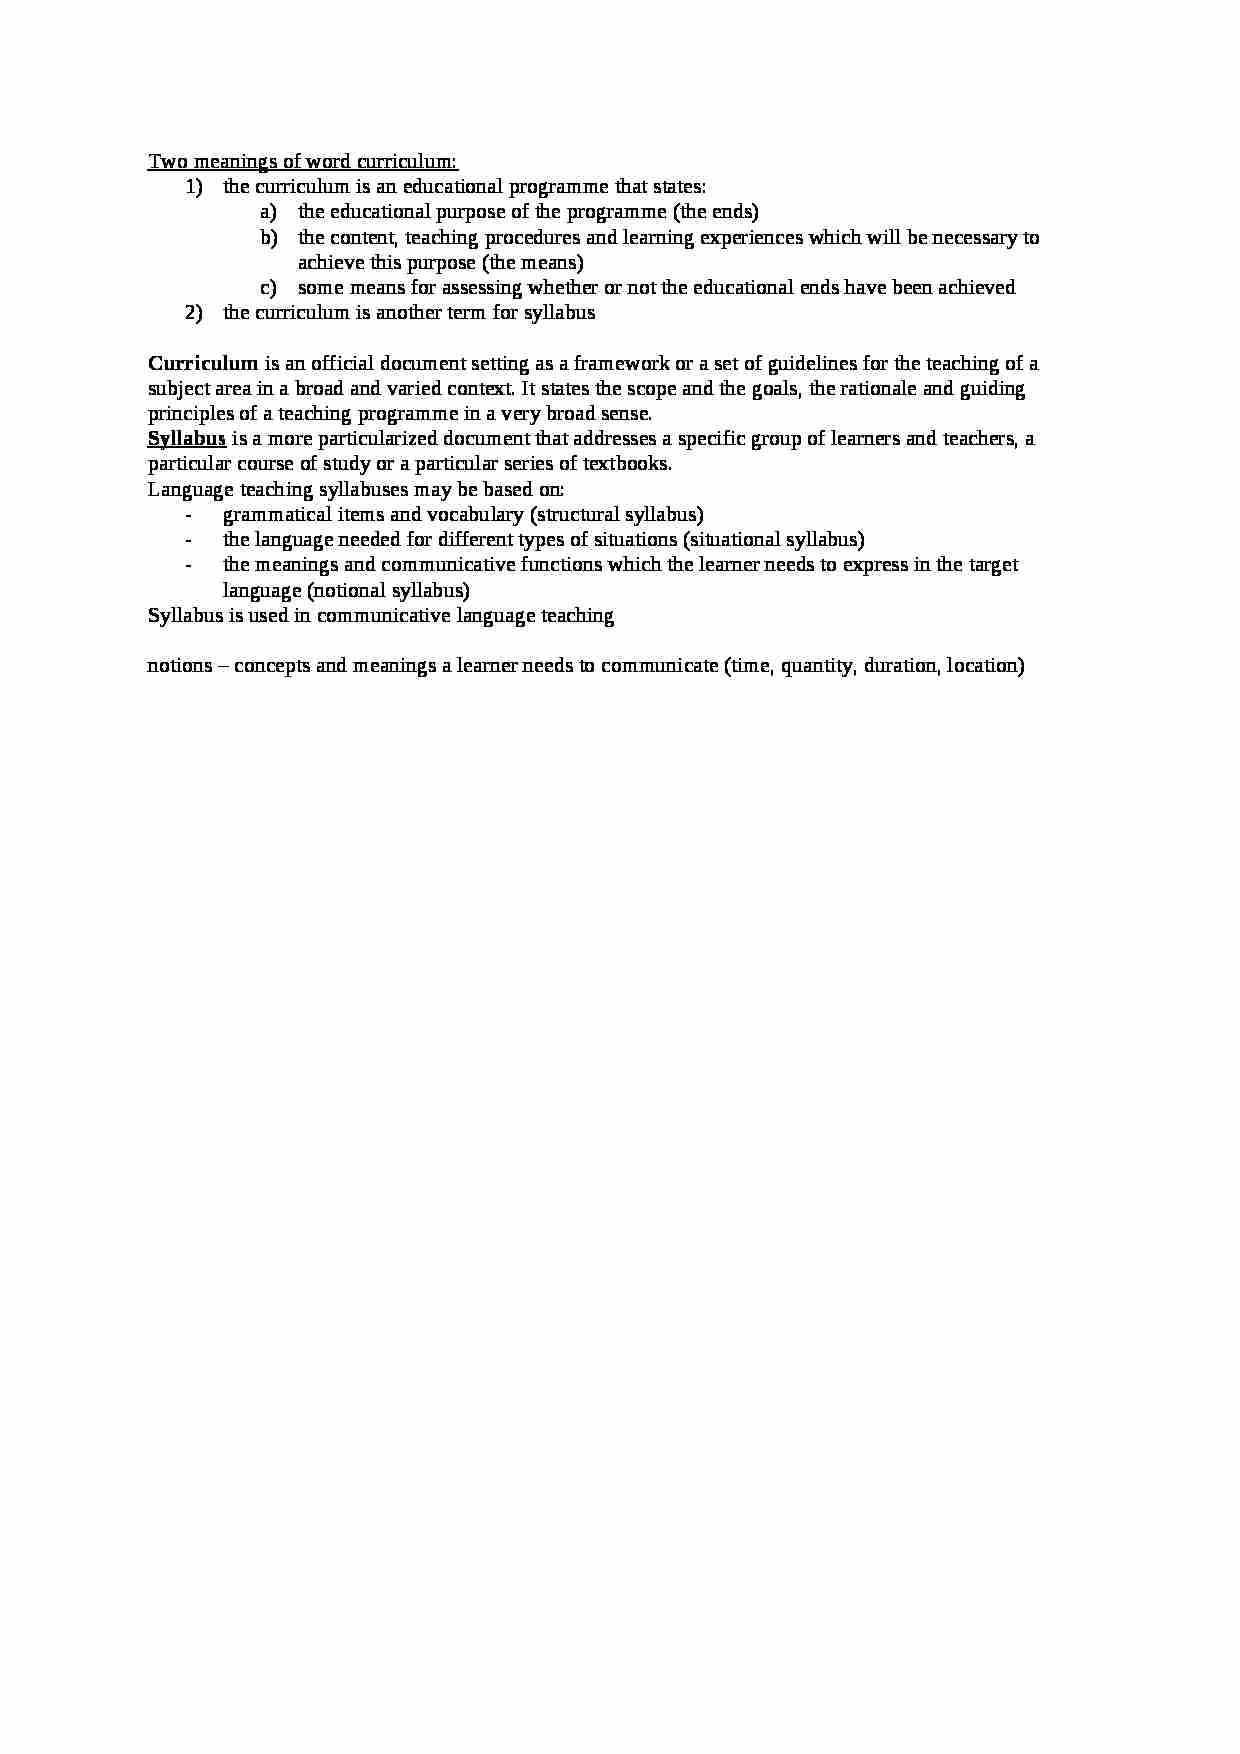 Curriculum and syllabus - definitions-opracowanie - strona 1